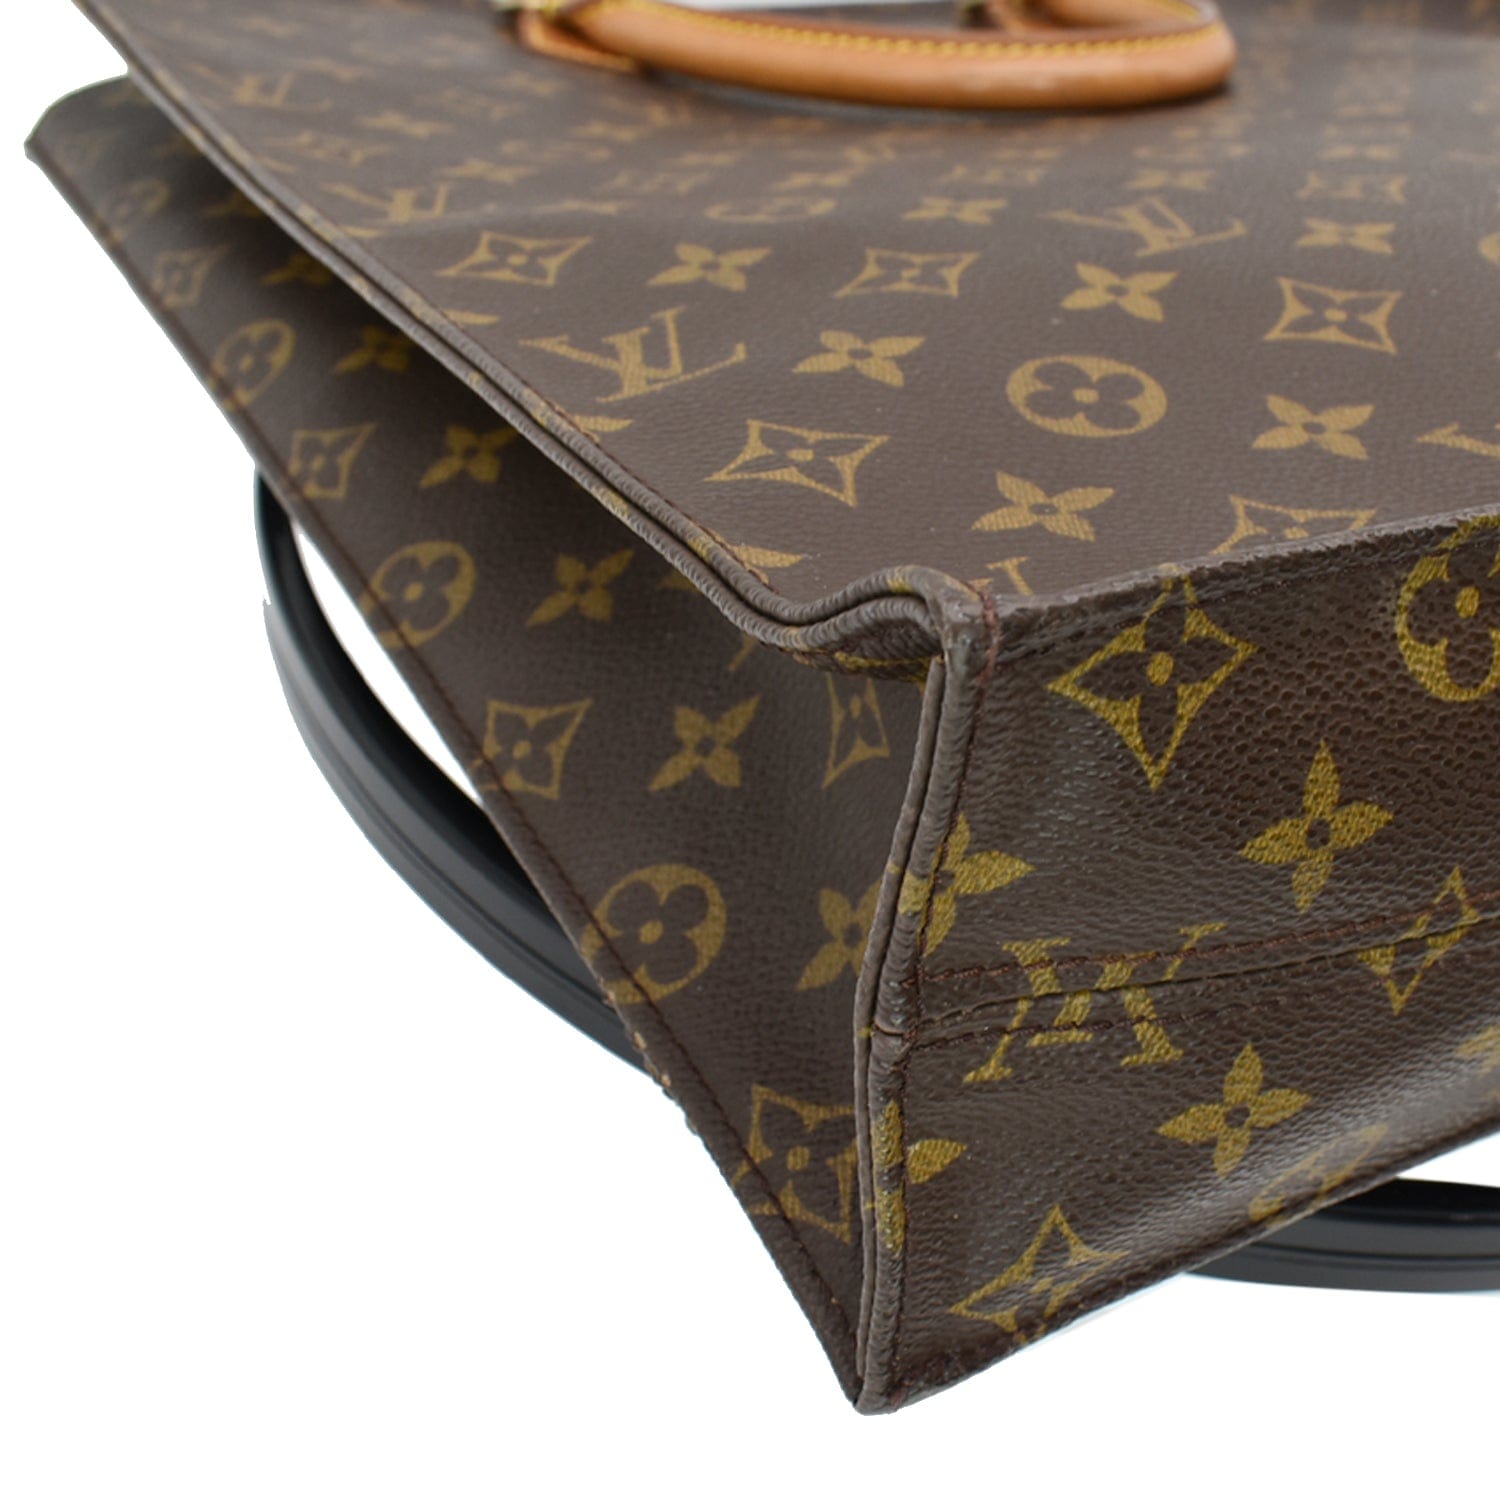 Louis Vuitton Sac Plat Handbag Tote Bag Monogram